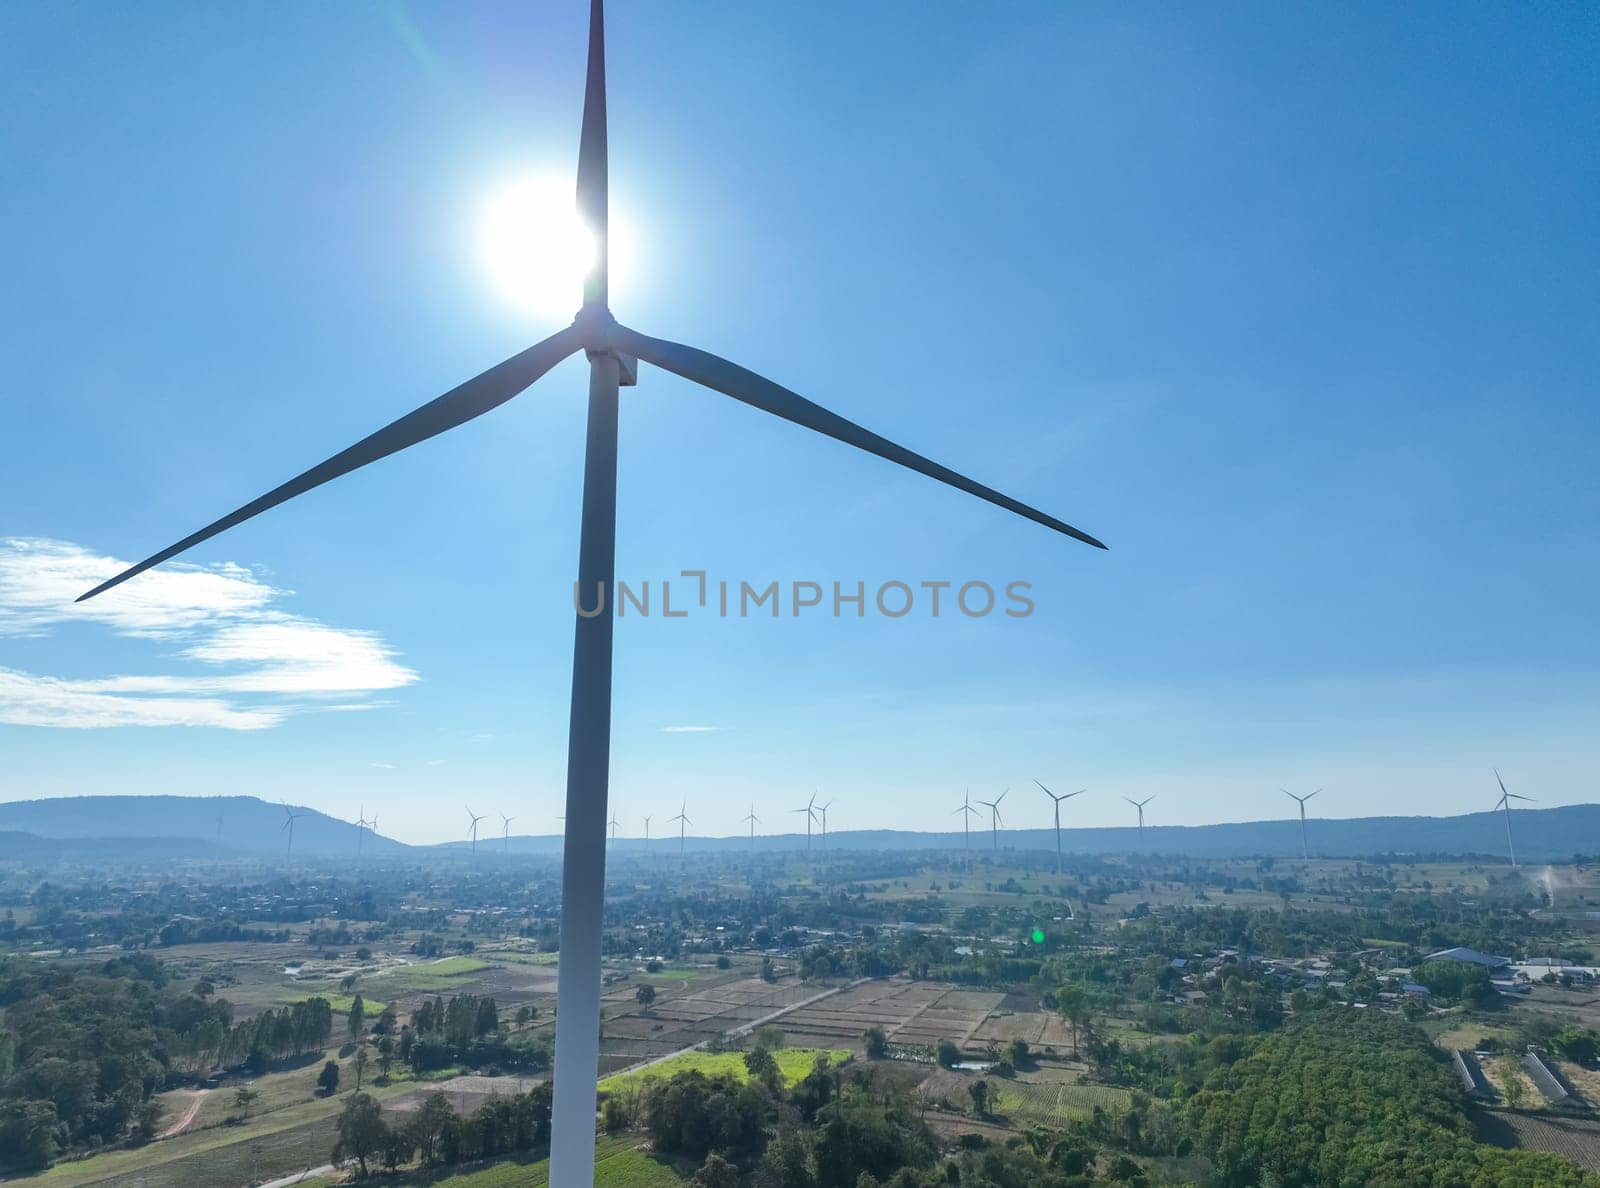 Landscape of wind farm. Wind energy. Wind power. Sustainable, renewable energy. Wind turbines generate electricity. Sustainable development. Green technology for energy sustainability. Green energy. by Fahroni